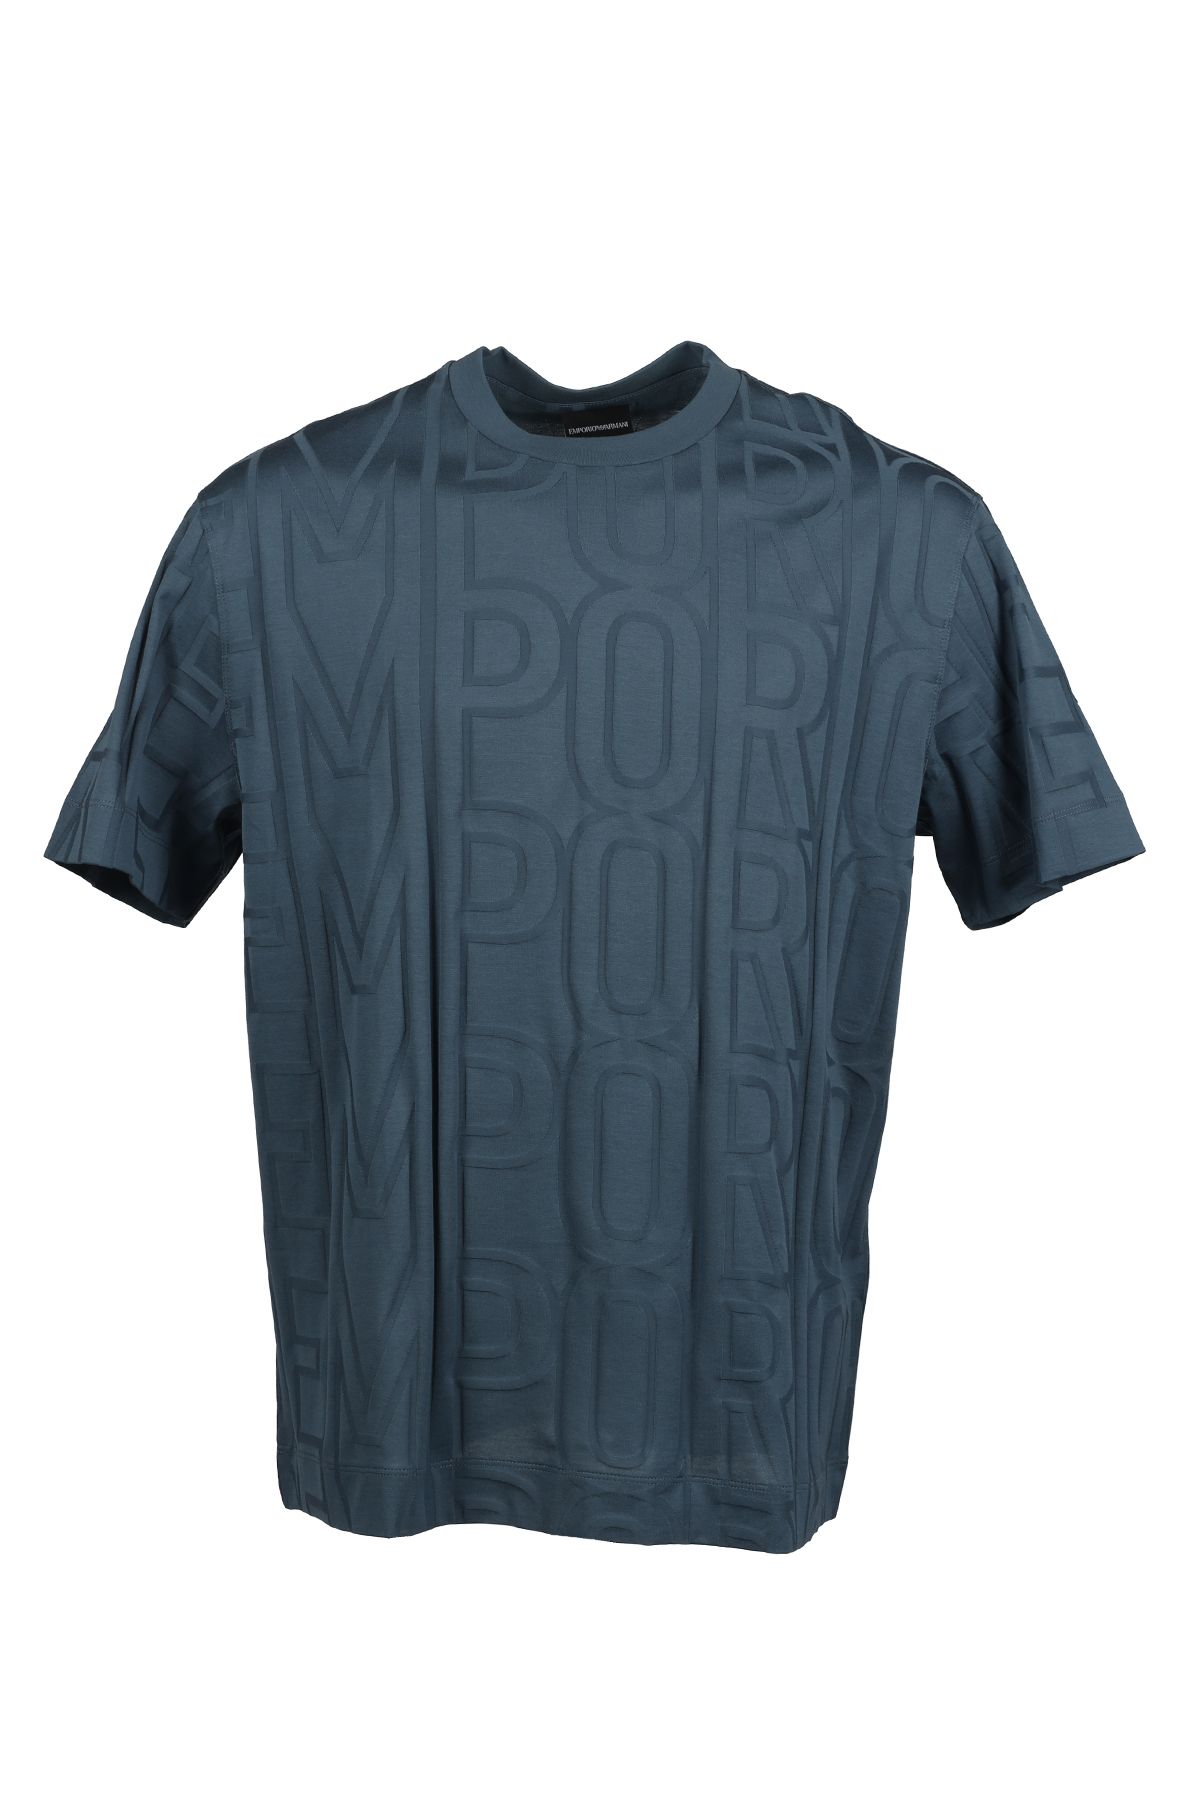 Emporio Armani Erkek Marka Logolu Kısa Kol Yuvarlak Yaka Yeşil T-Shirt 6R1TDM 1JGYZ-09M1